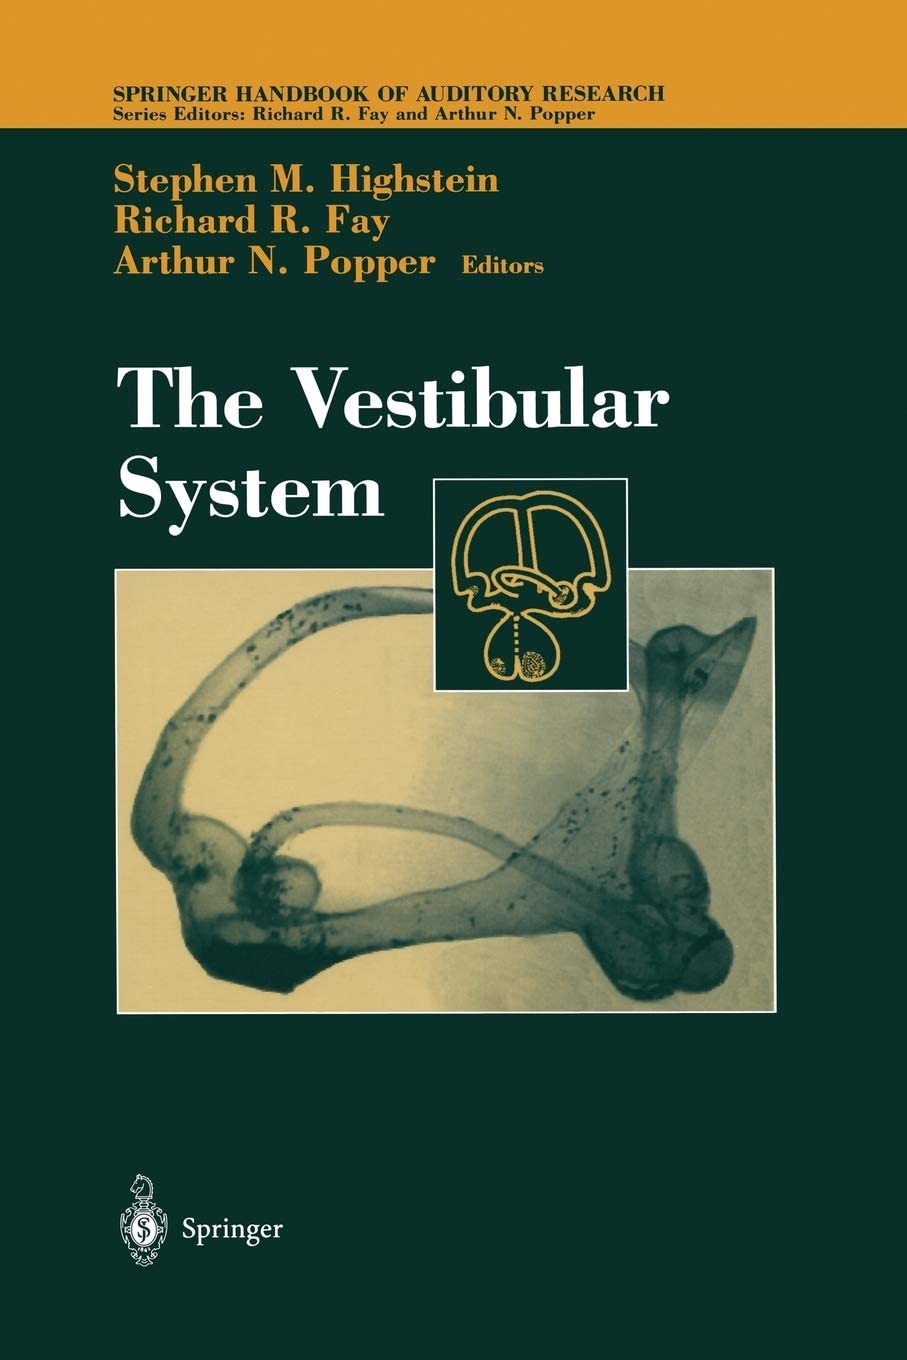 The Vestibular System (Springer Handbook of Auditory Research, 19)